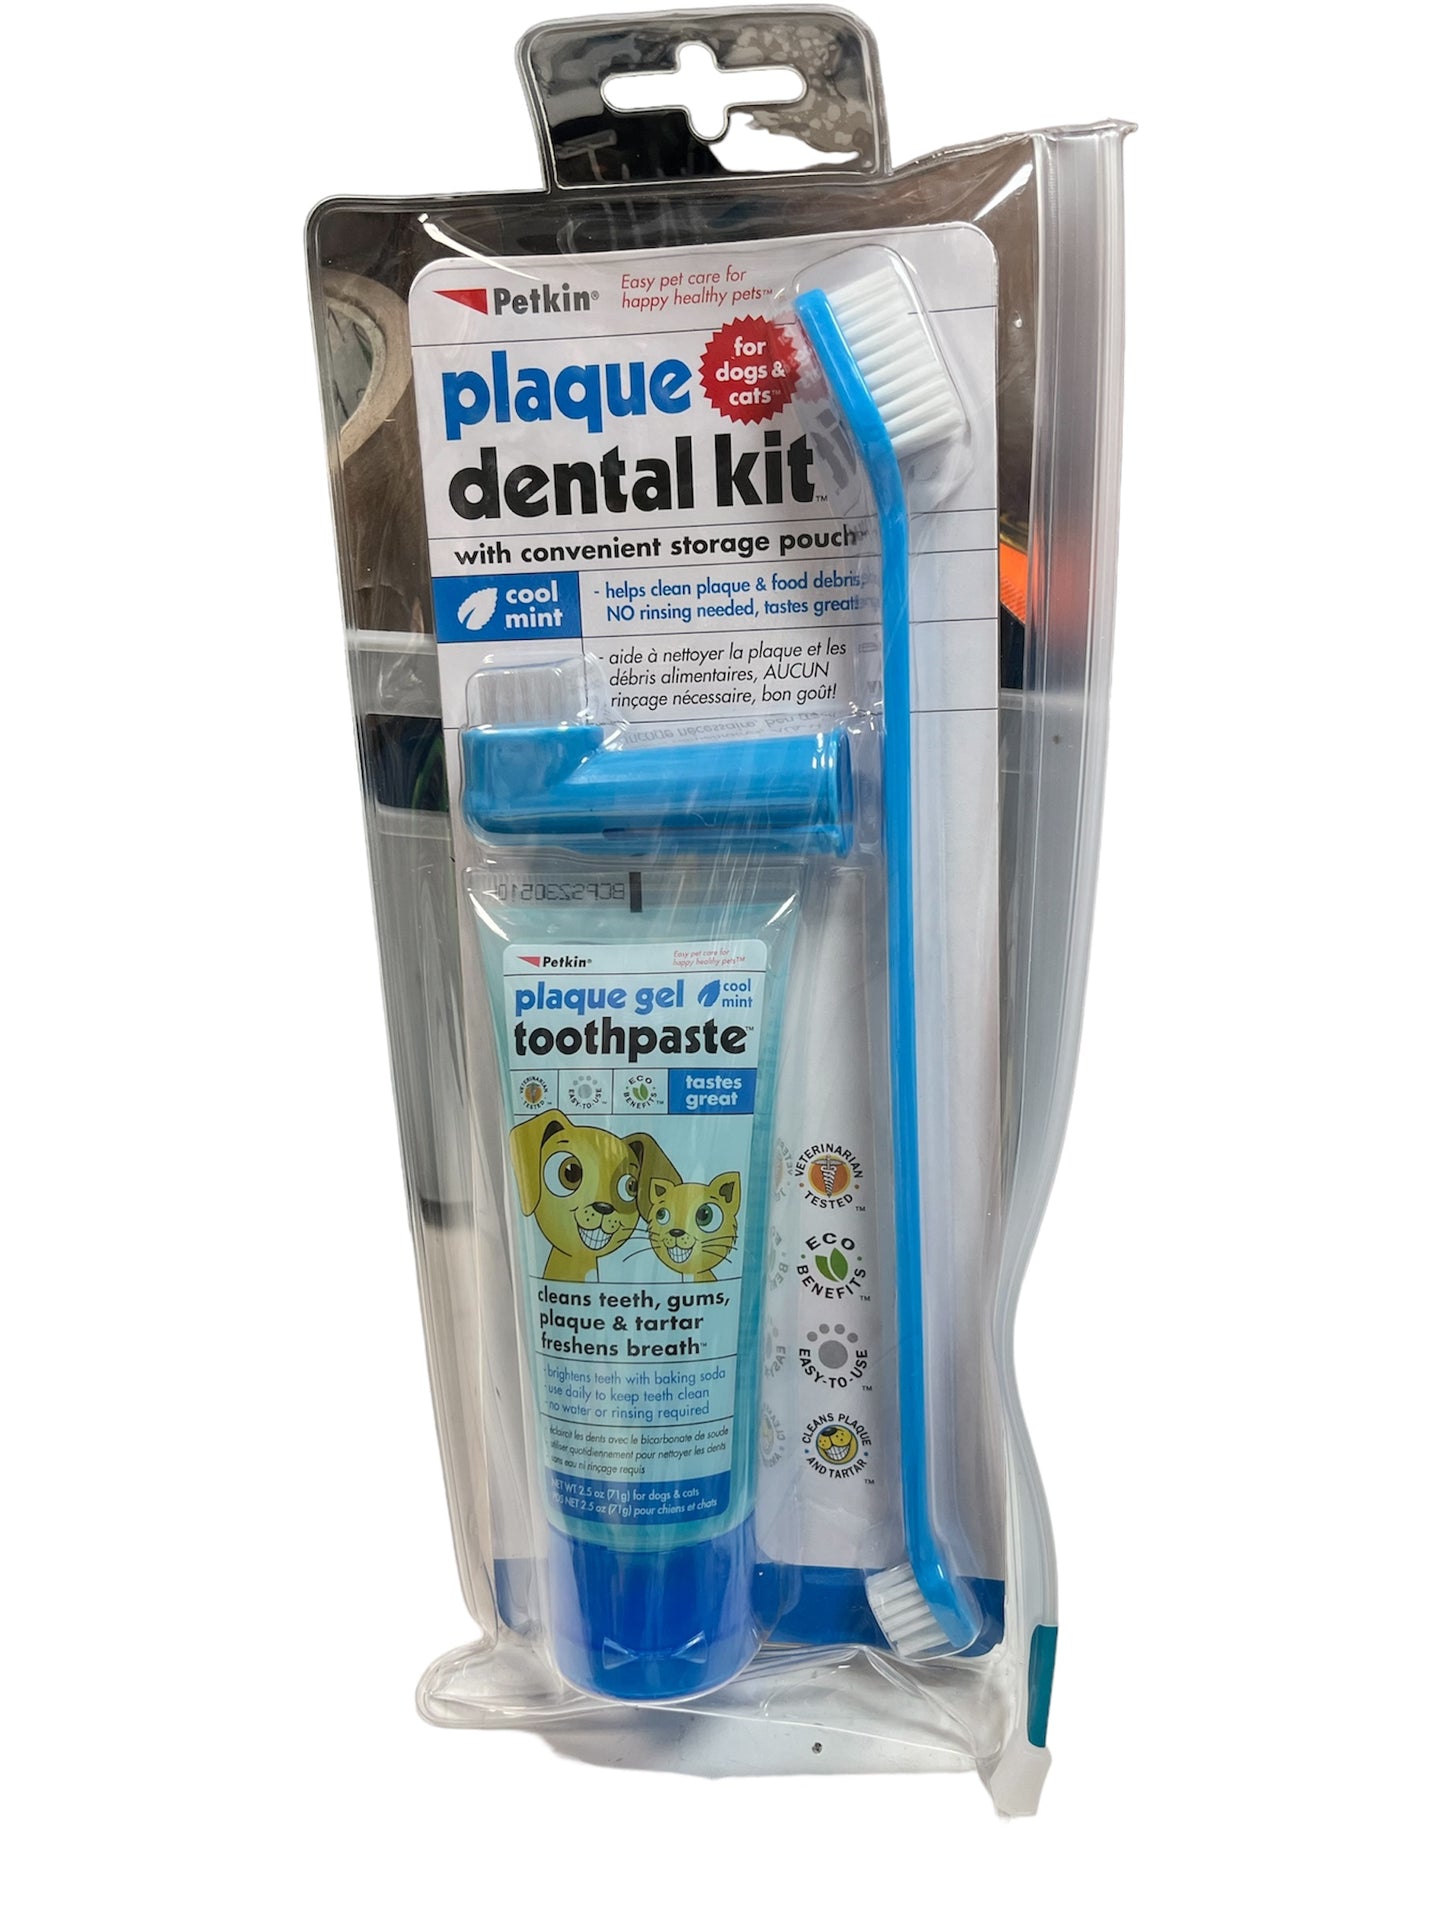 Petkin plaque dental kit